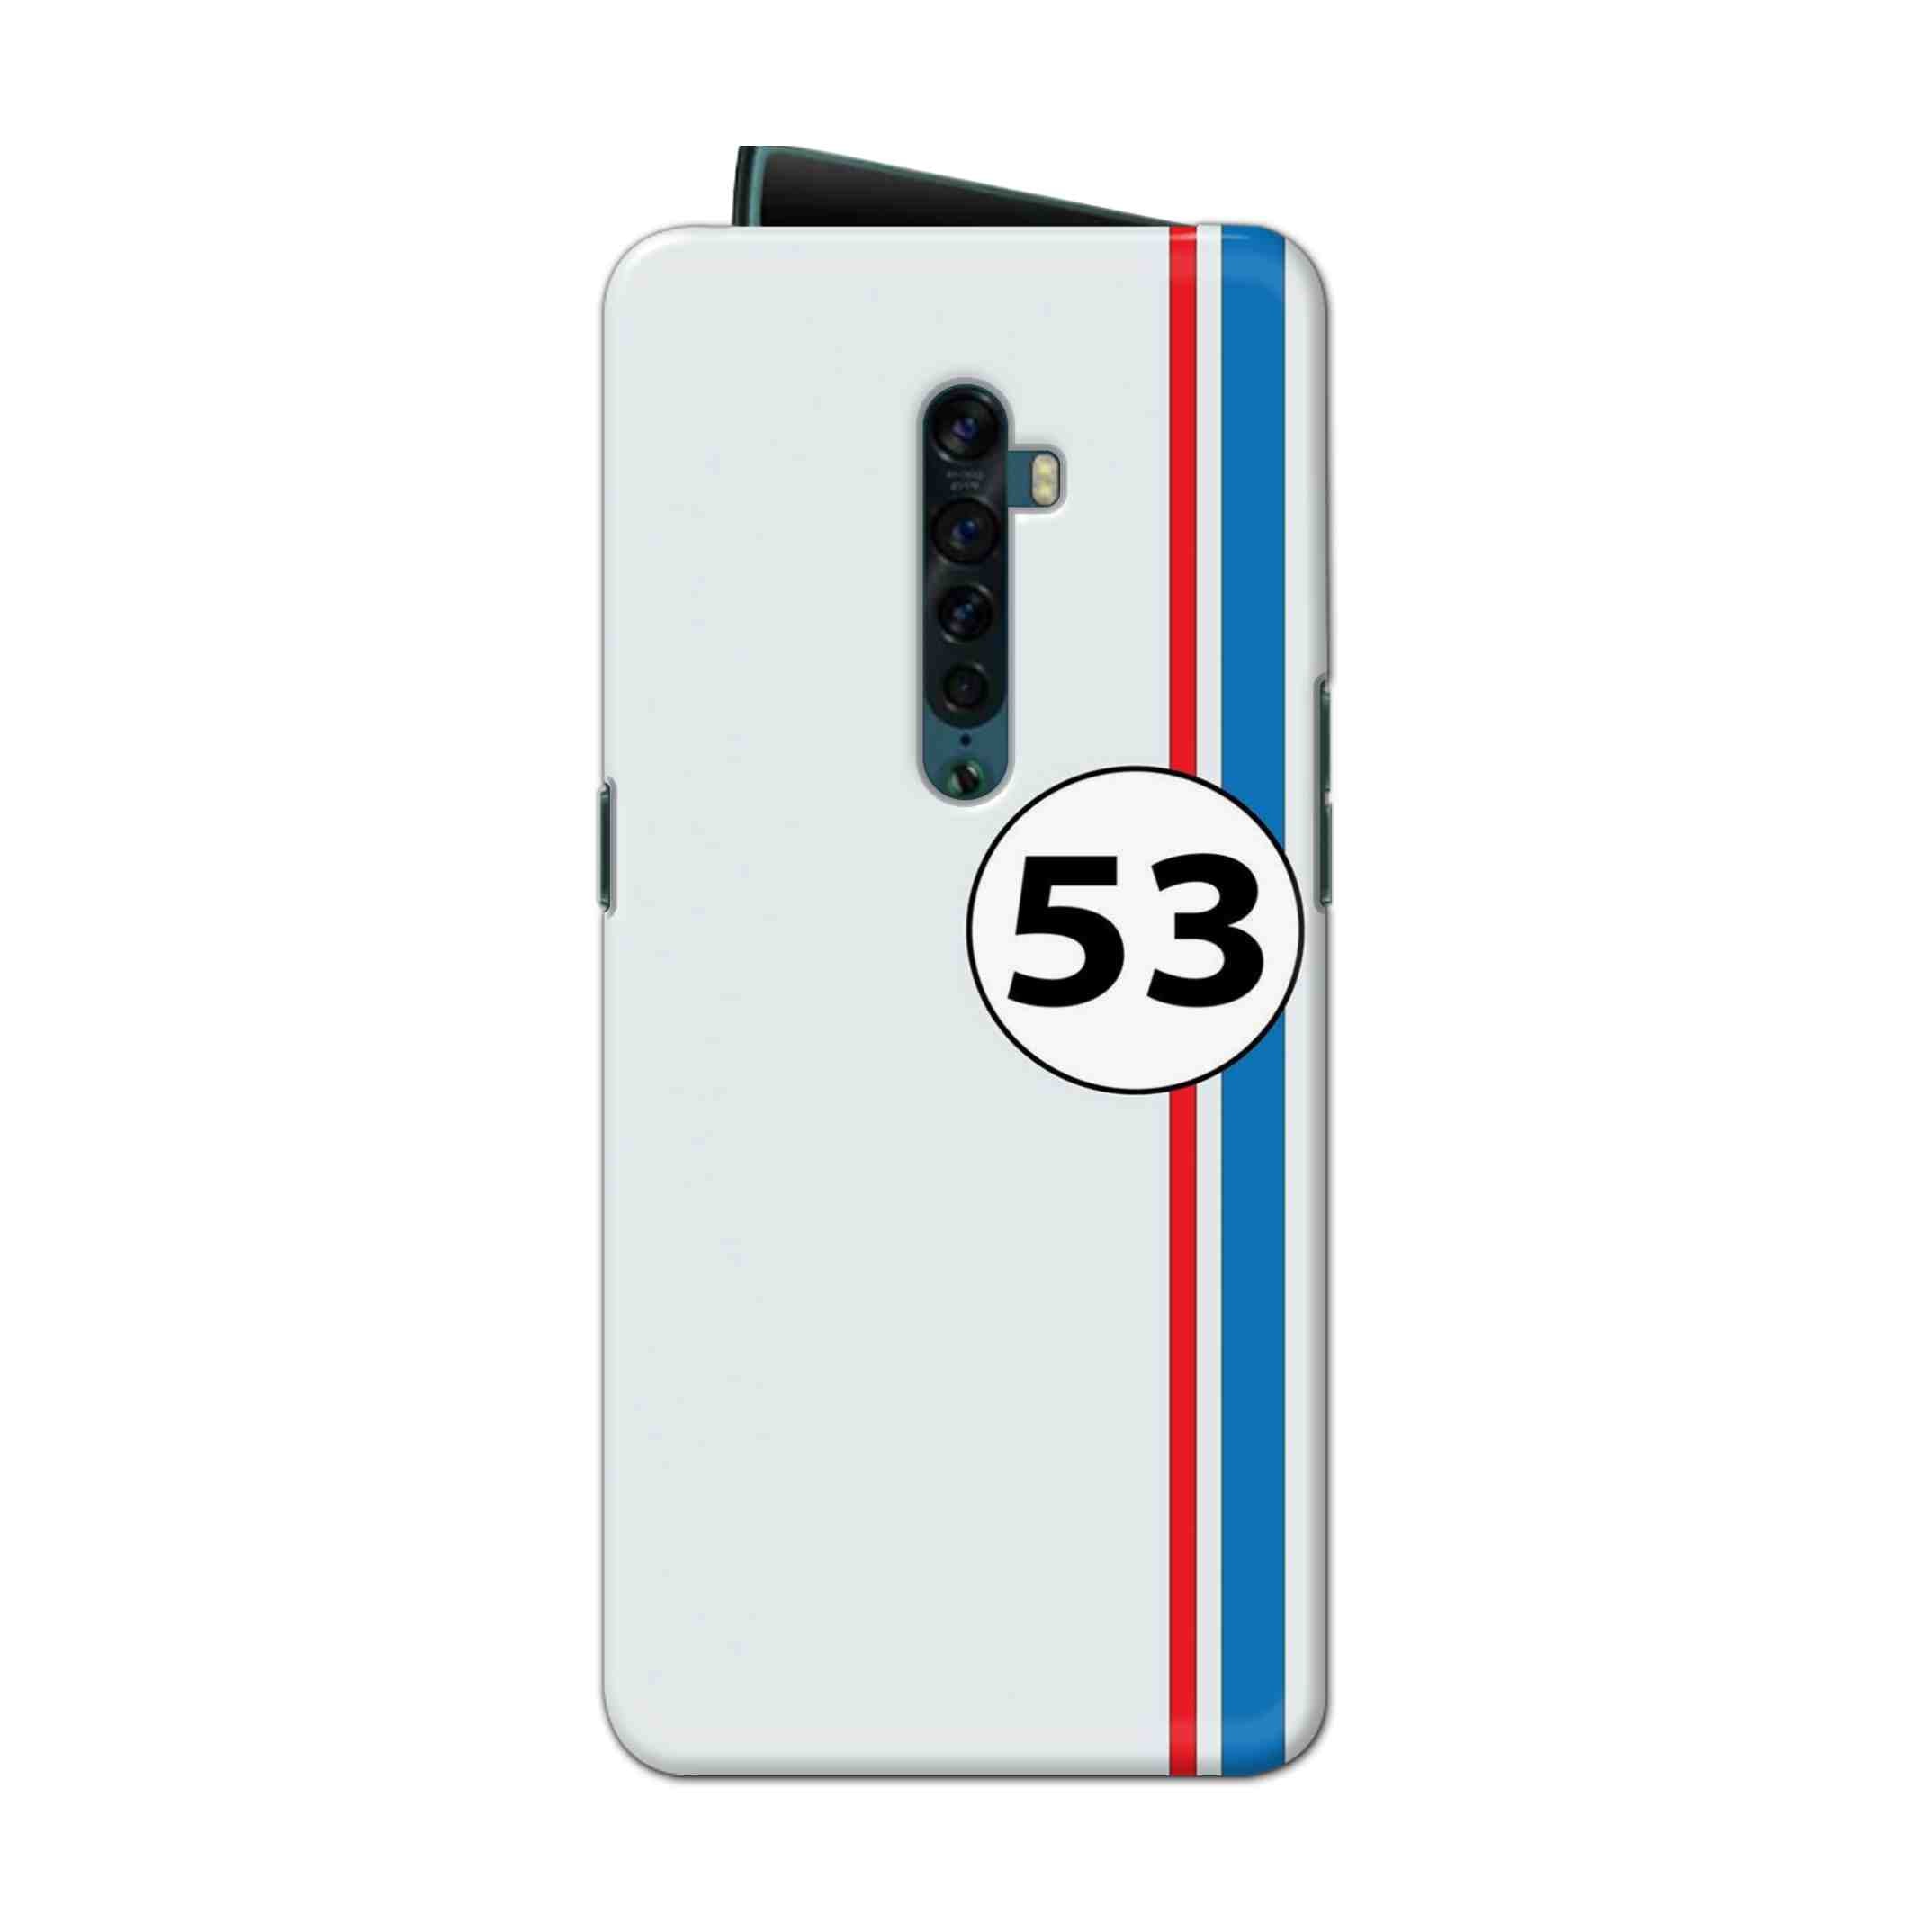 Buy 53 Hard Back Mobile Phone Case Cover For Oppo Reno 2 Online